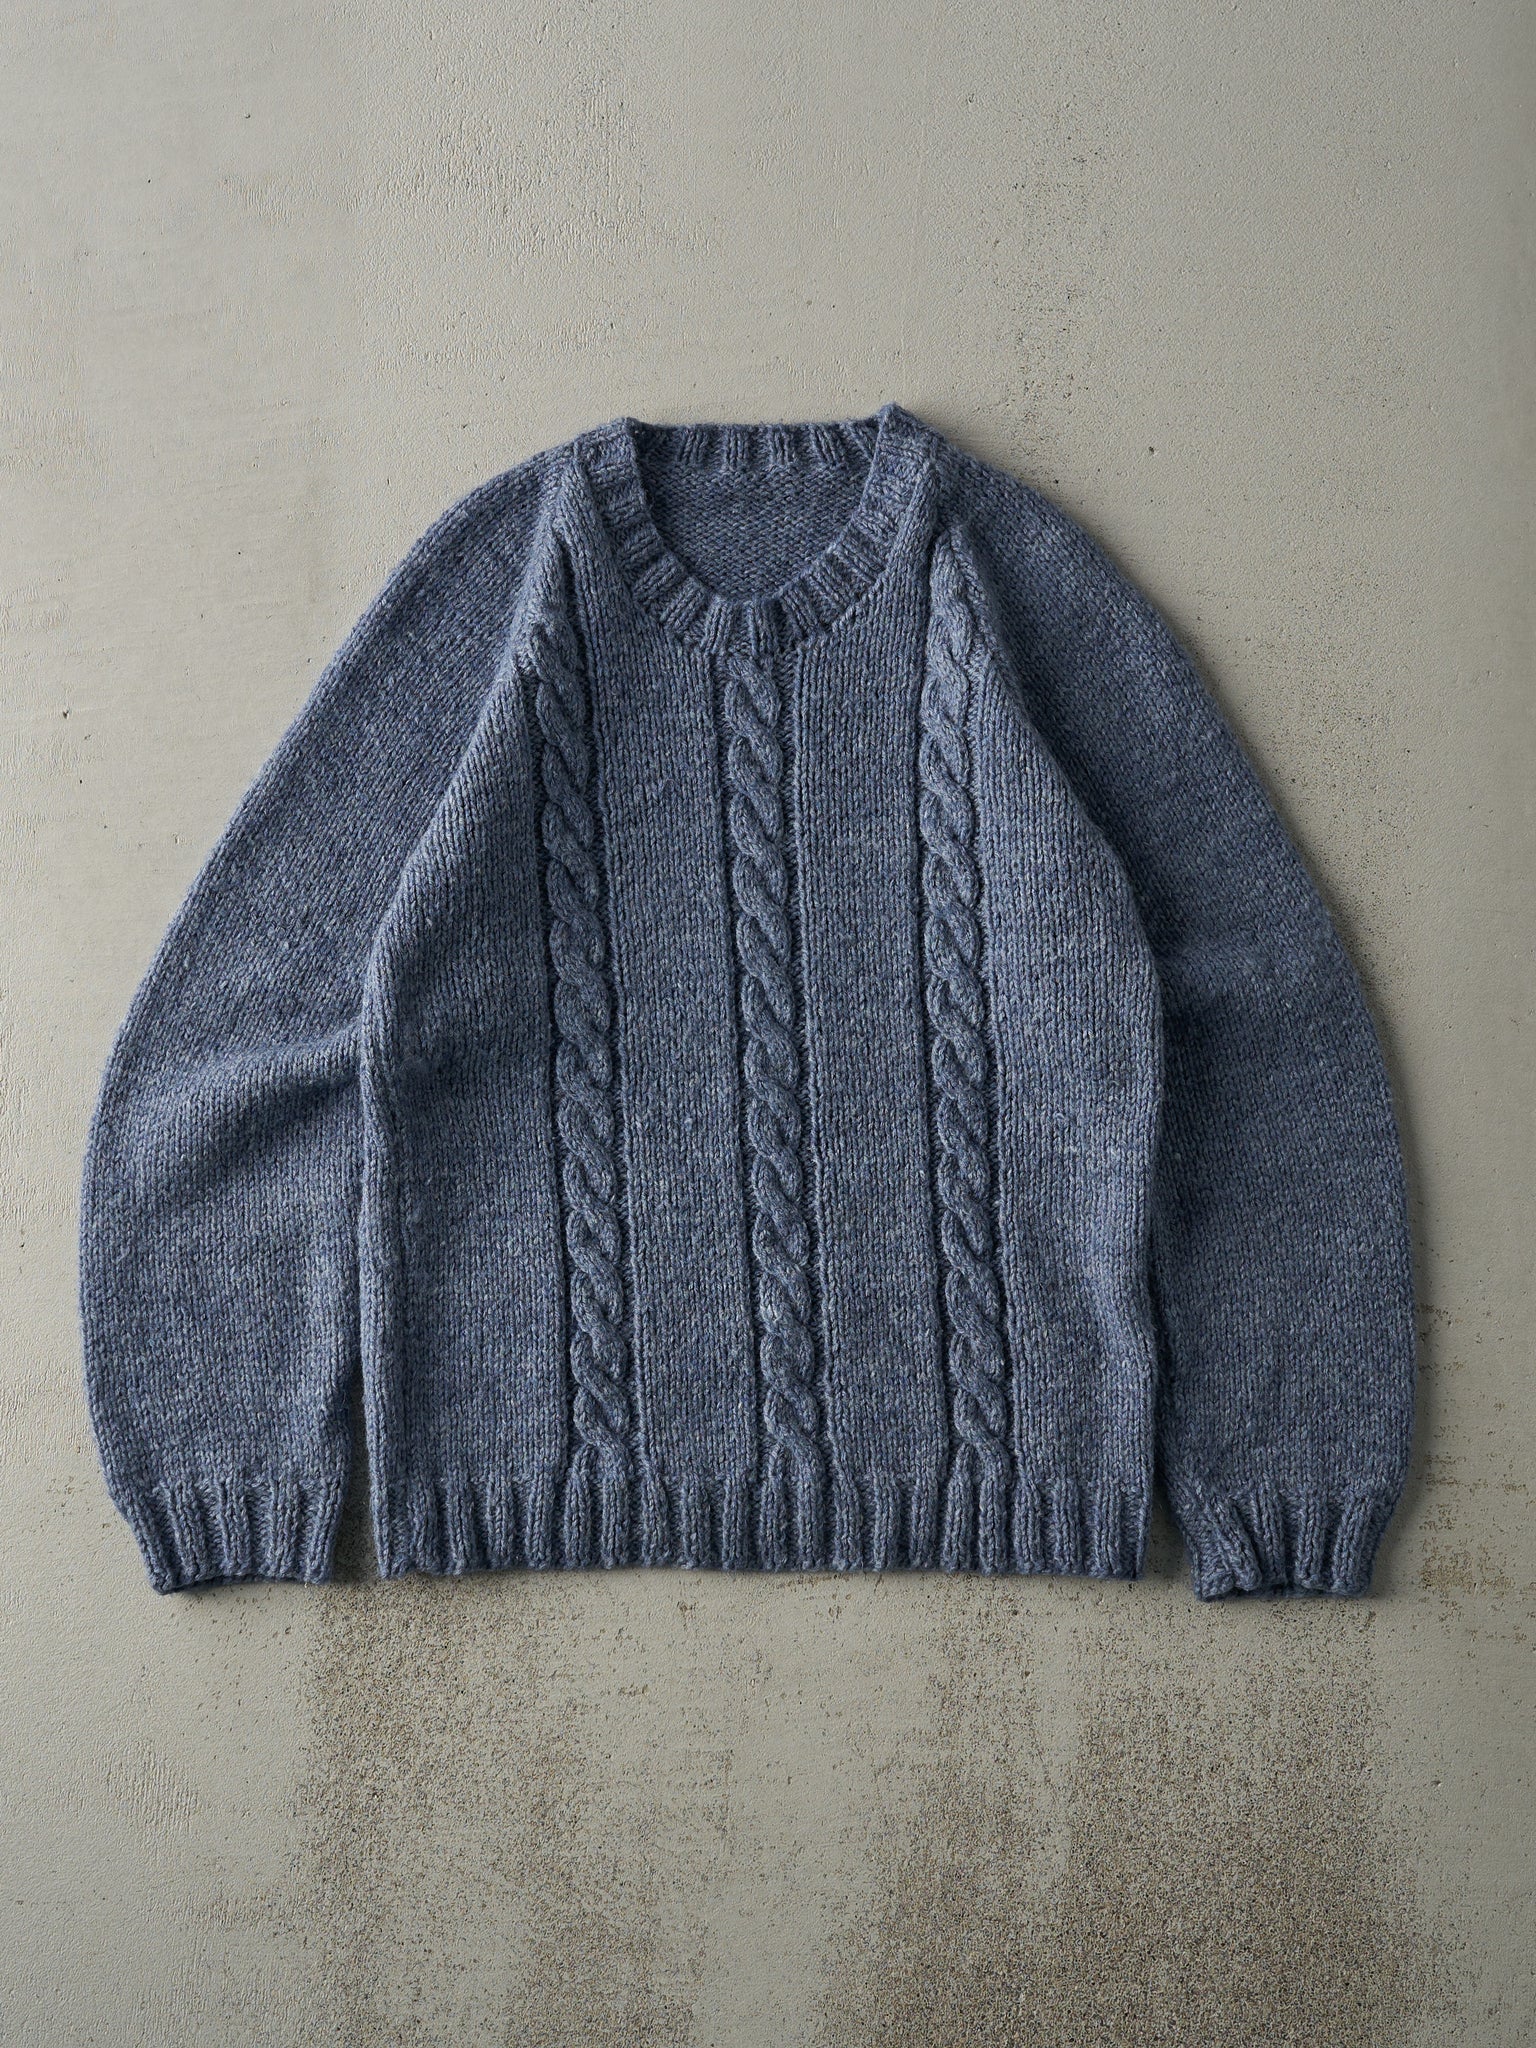 Vintage 80s Light Blue Cable Knit Sweater (S/M)